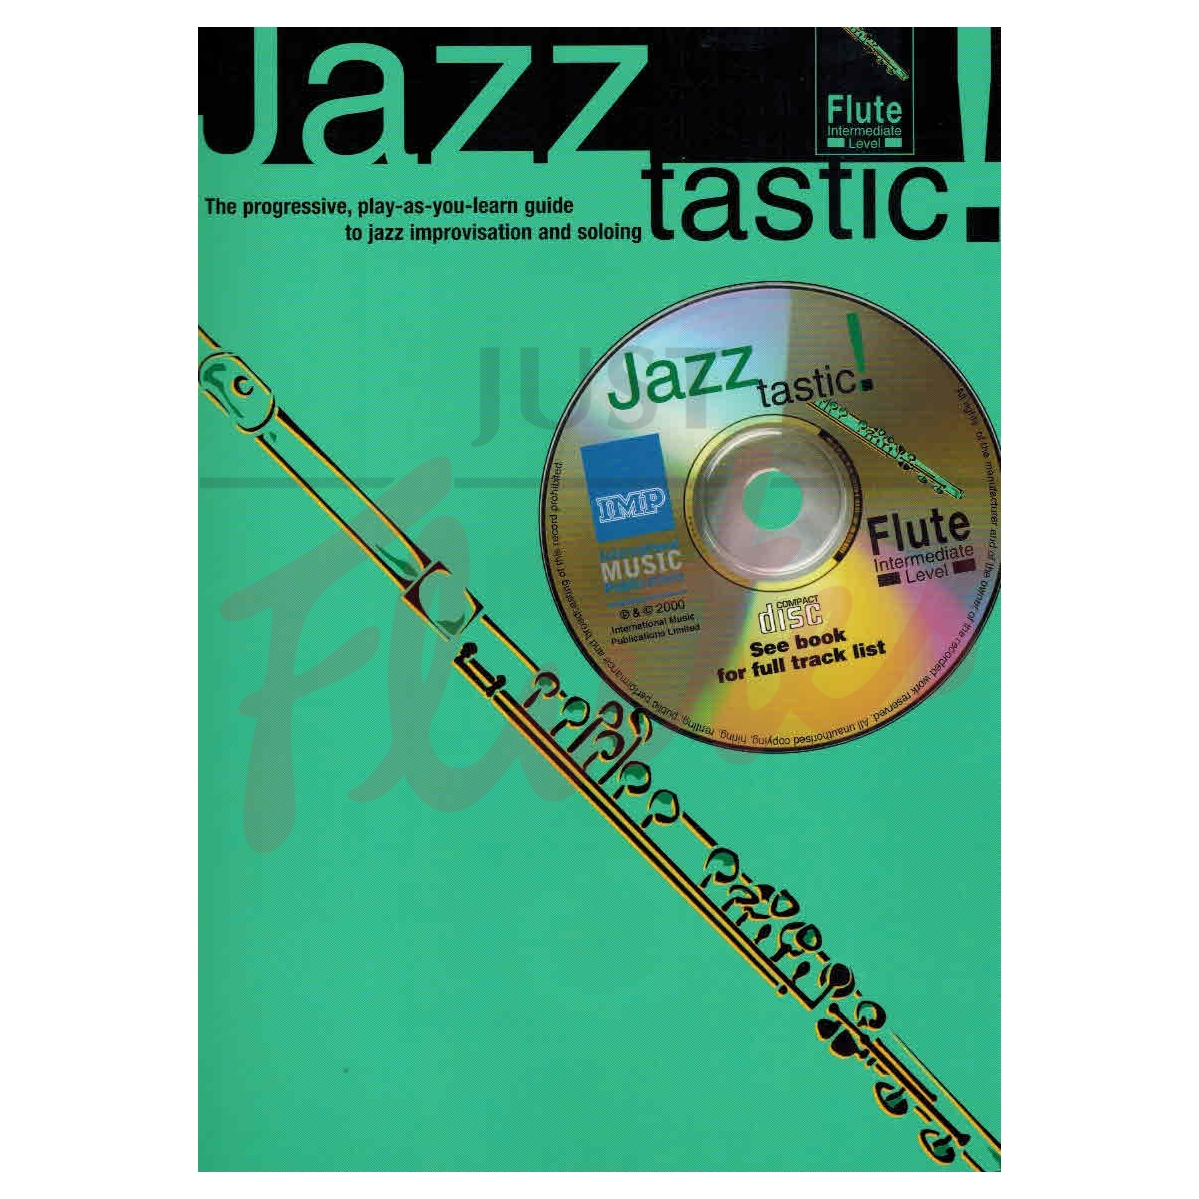 Jazztastic! Intermediate Level [Flute]